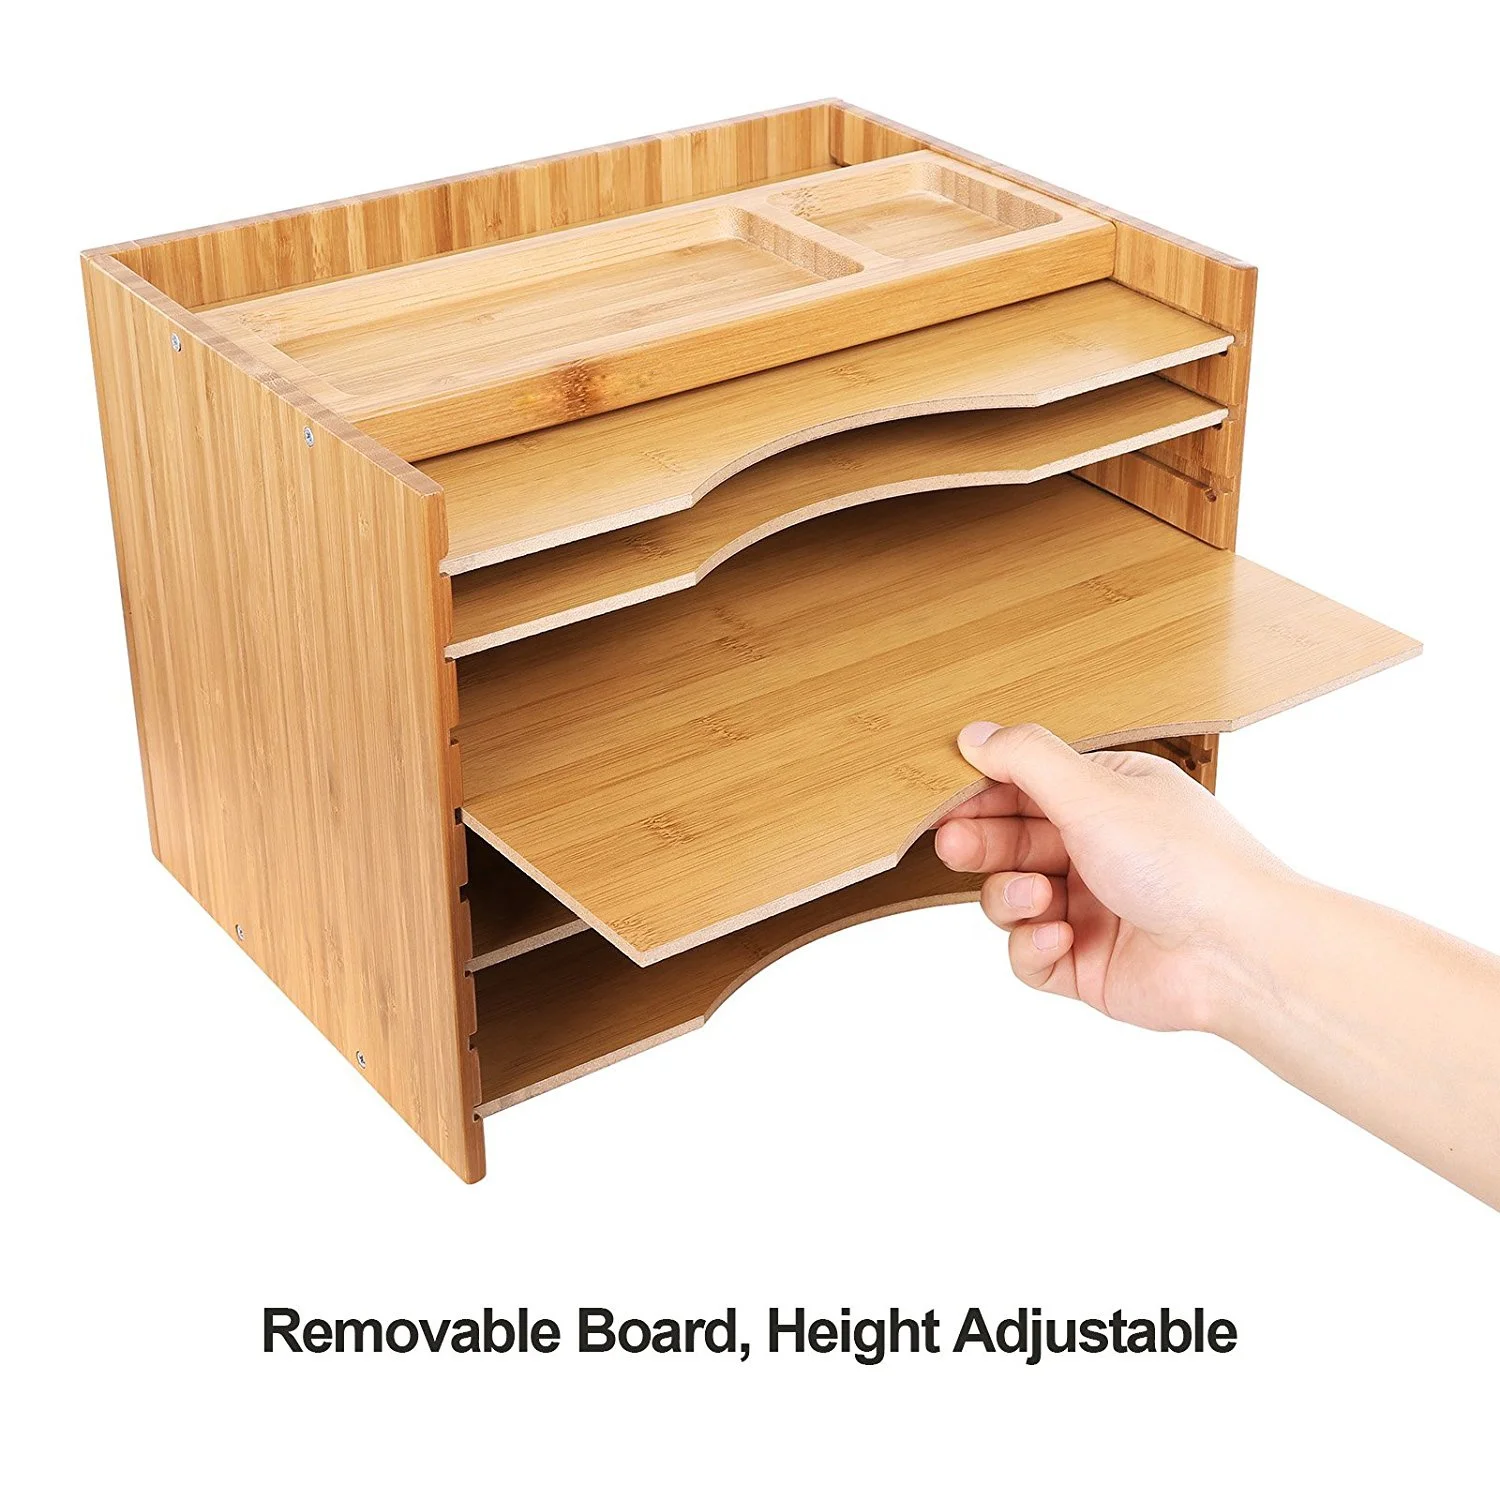 
Office Adjustable Height Removable 5 Tier A4 Document Magazine Wooden Desktop Organizer 